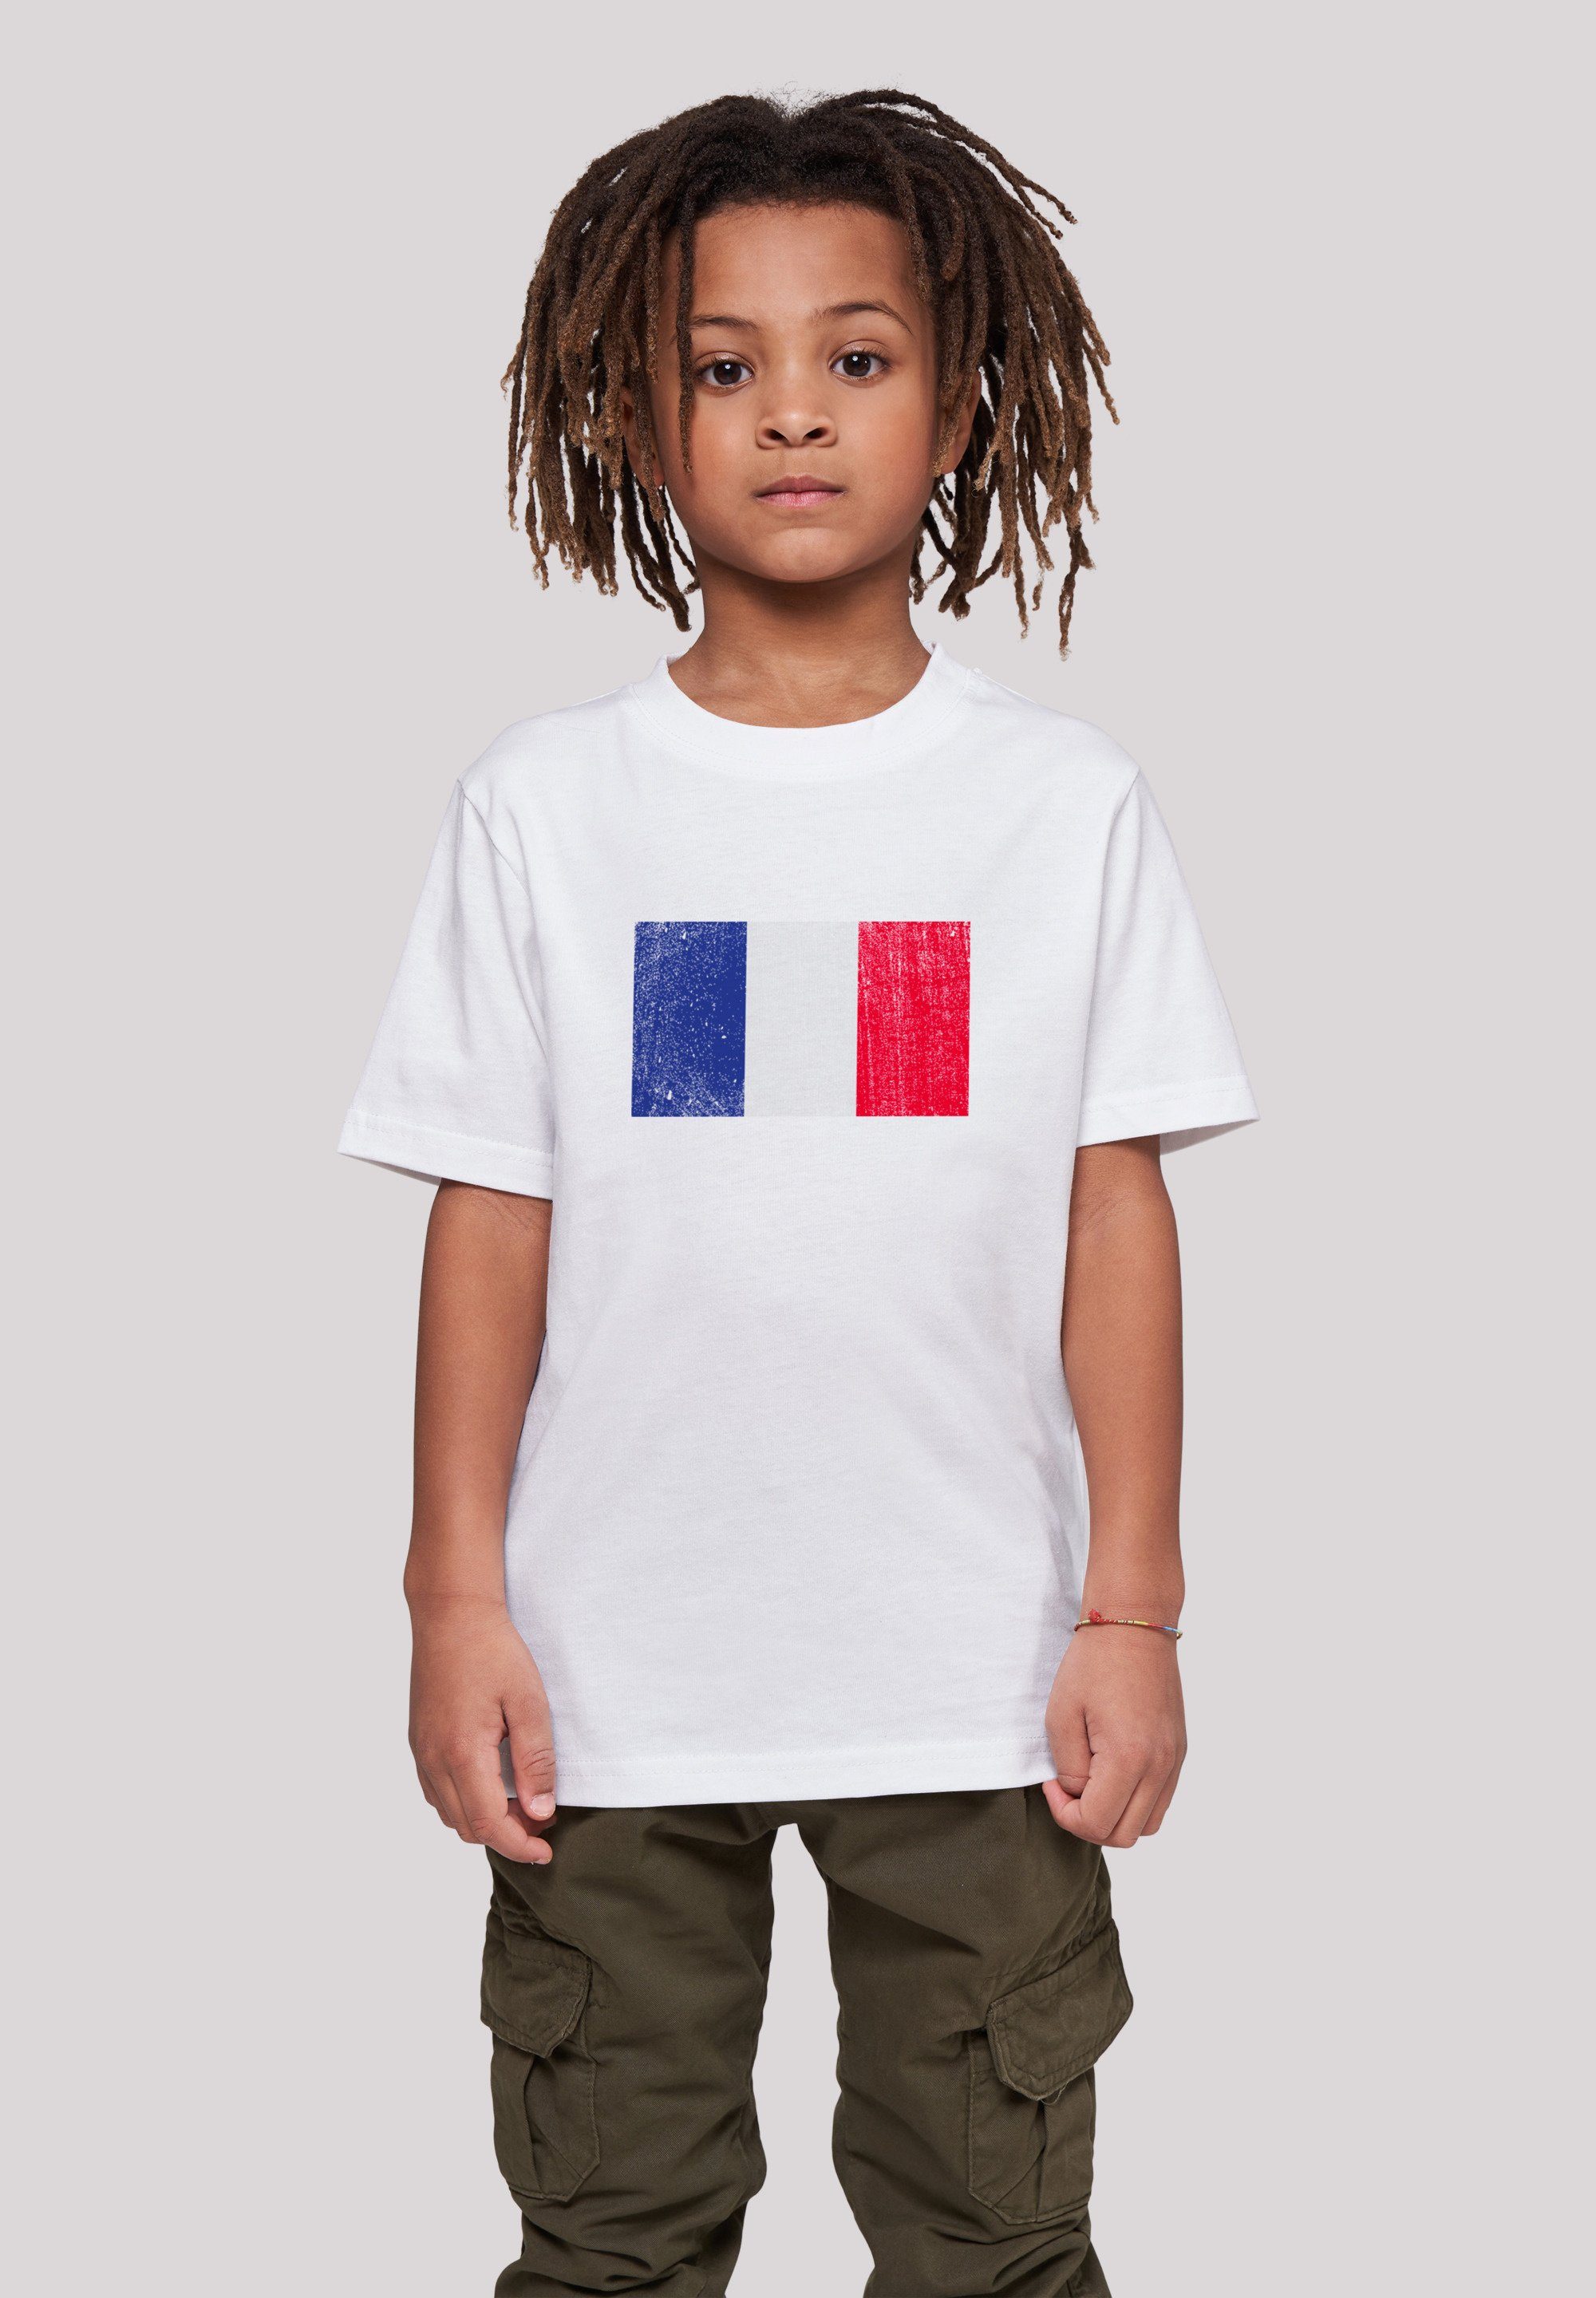 Model 145/152 Größe Frankreich France Das ist Print, F4NT4STIC und T-Shirt groß distressed cm trägt Flagge 145